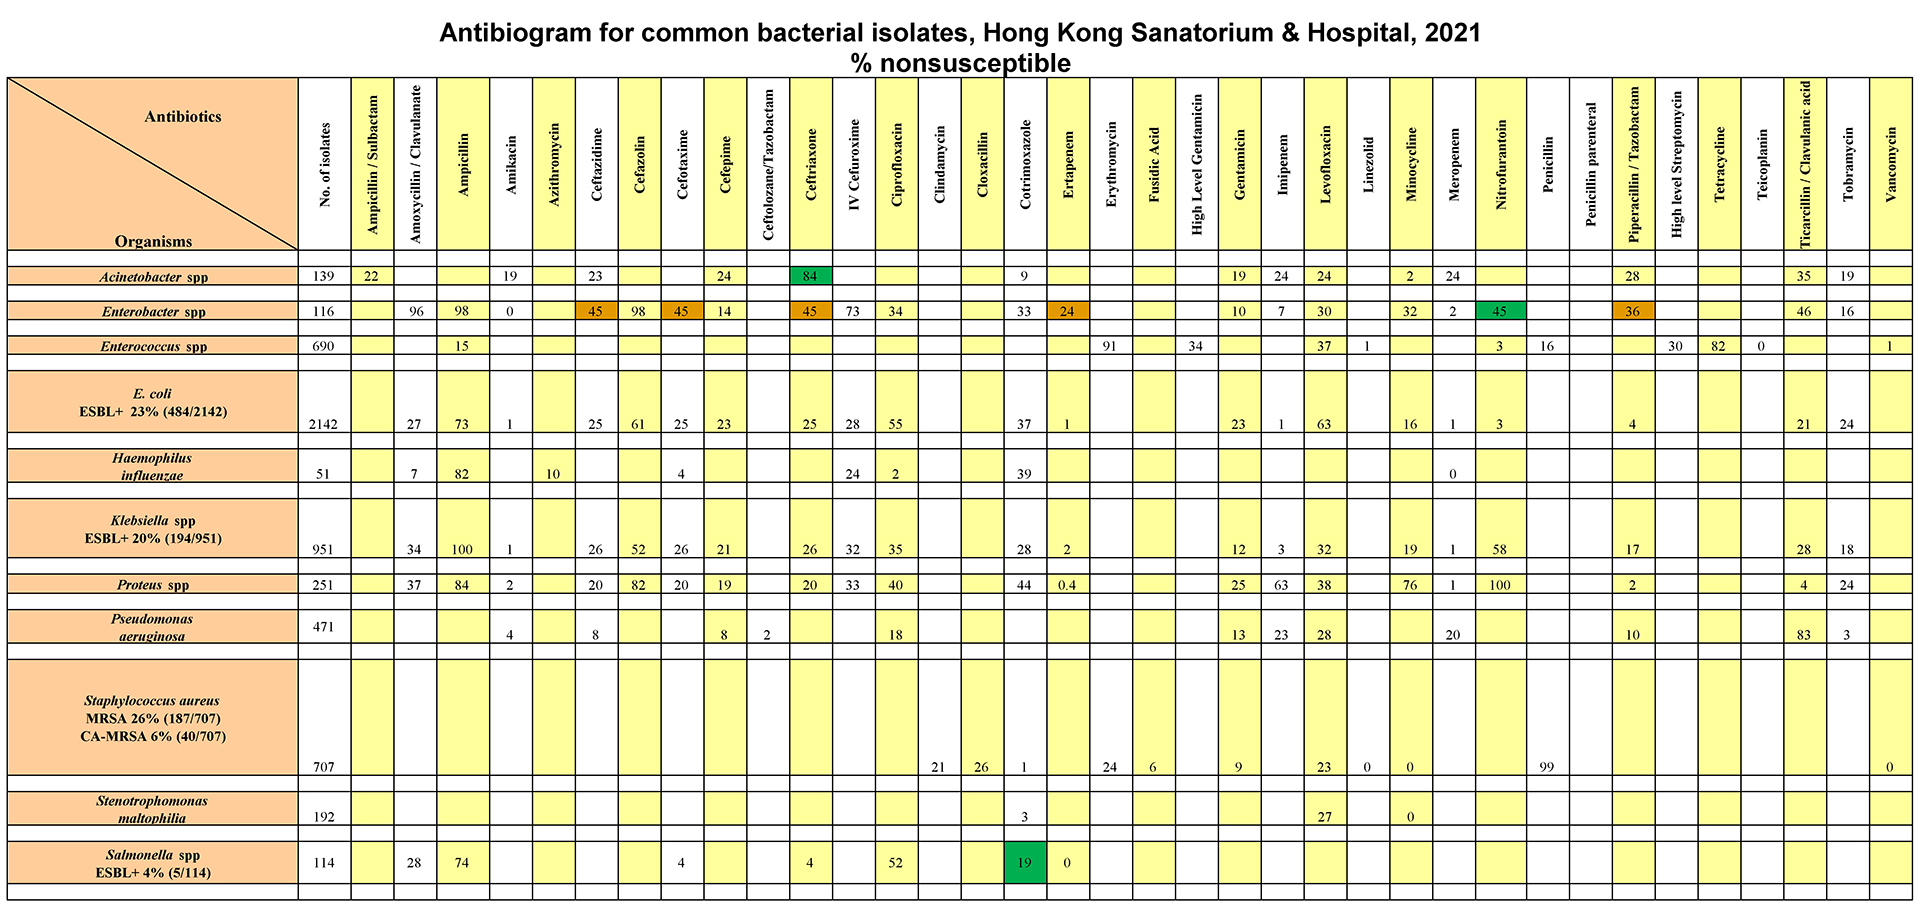 Table HKSH. Antibiogram for common bacterial isolates, Hong Kong Sanatorium & Hospital, 2021